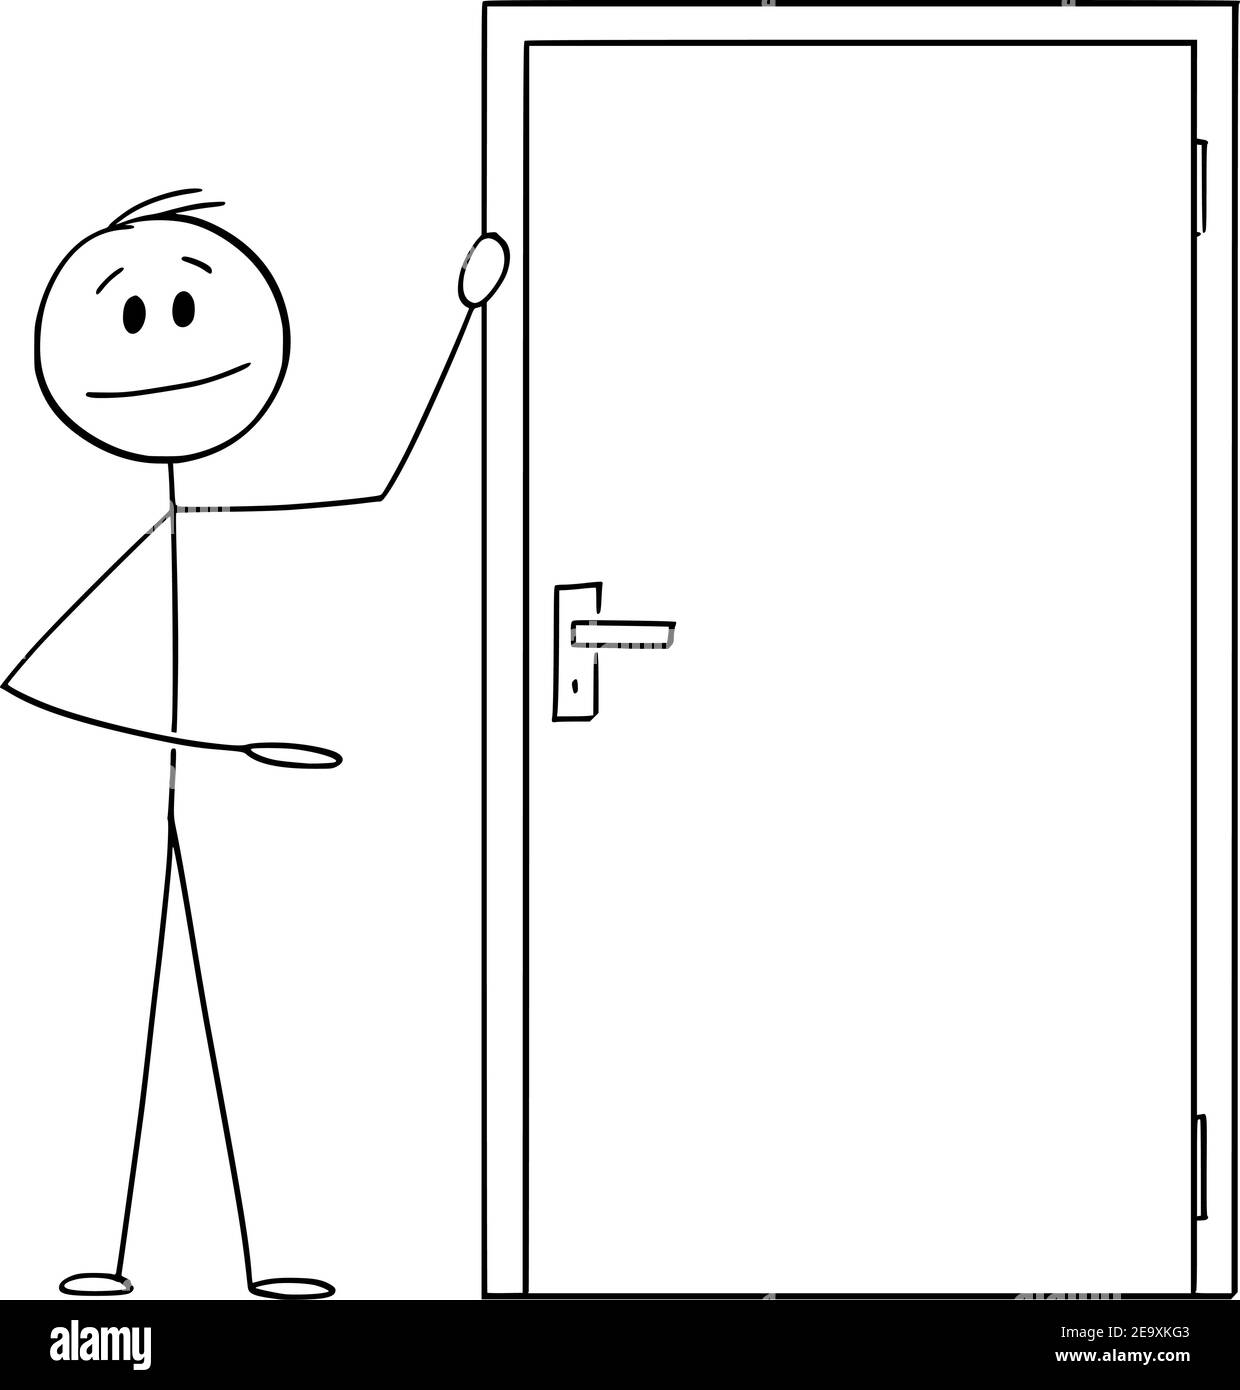 Mann oder Geschäftsmann zeigt Ausgang oder Eingangstür, Vektor Cartoon Stick Figur oder Figur Illustration. Stock Vektor